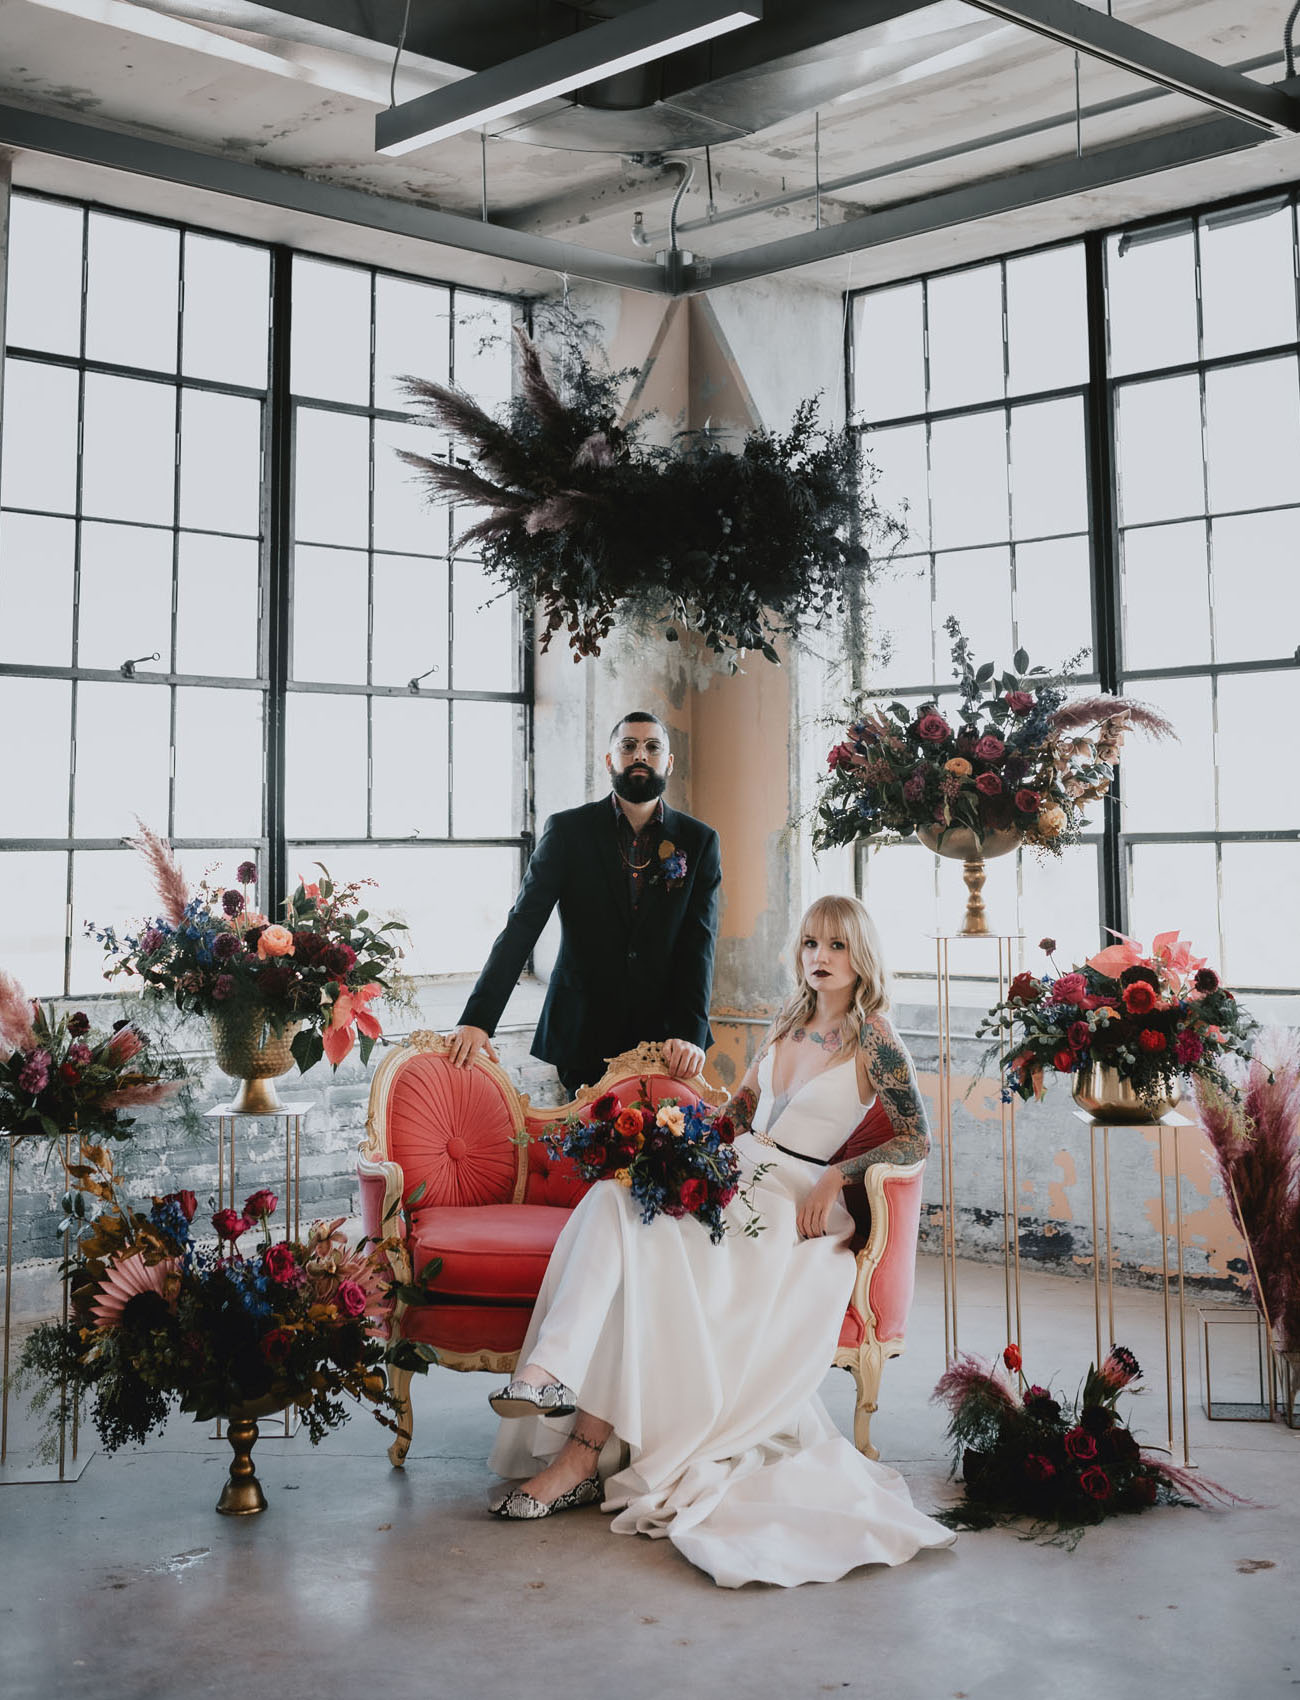 Edgy Non-traditional Warehouse Wedding Inspiration